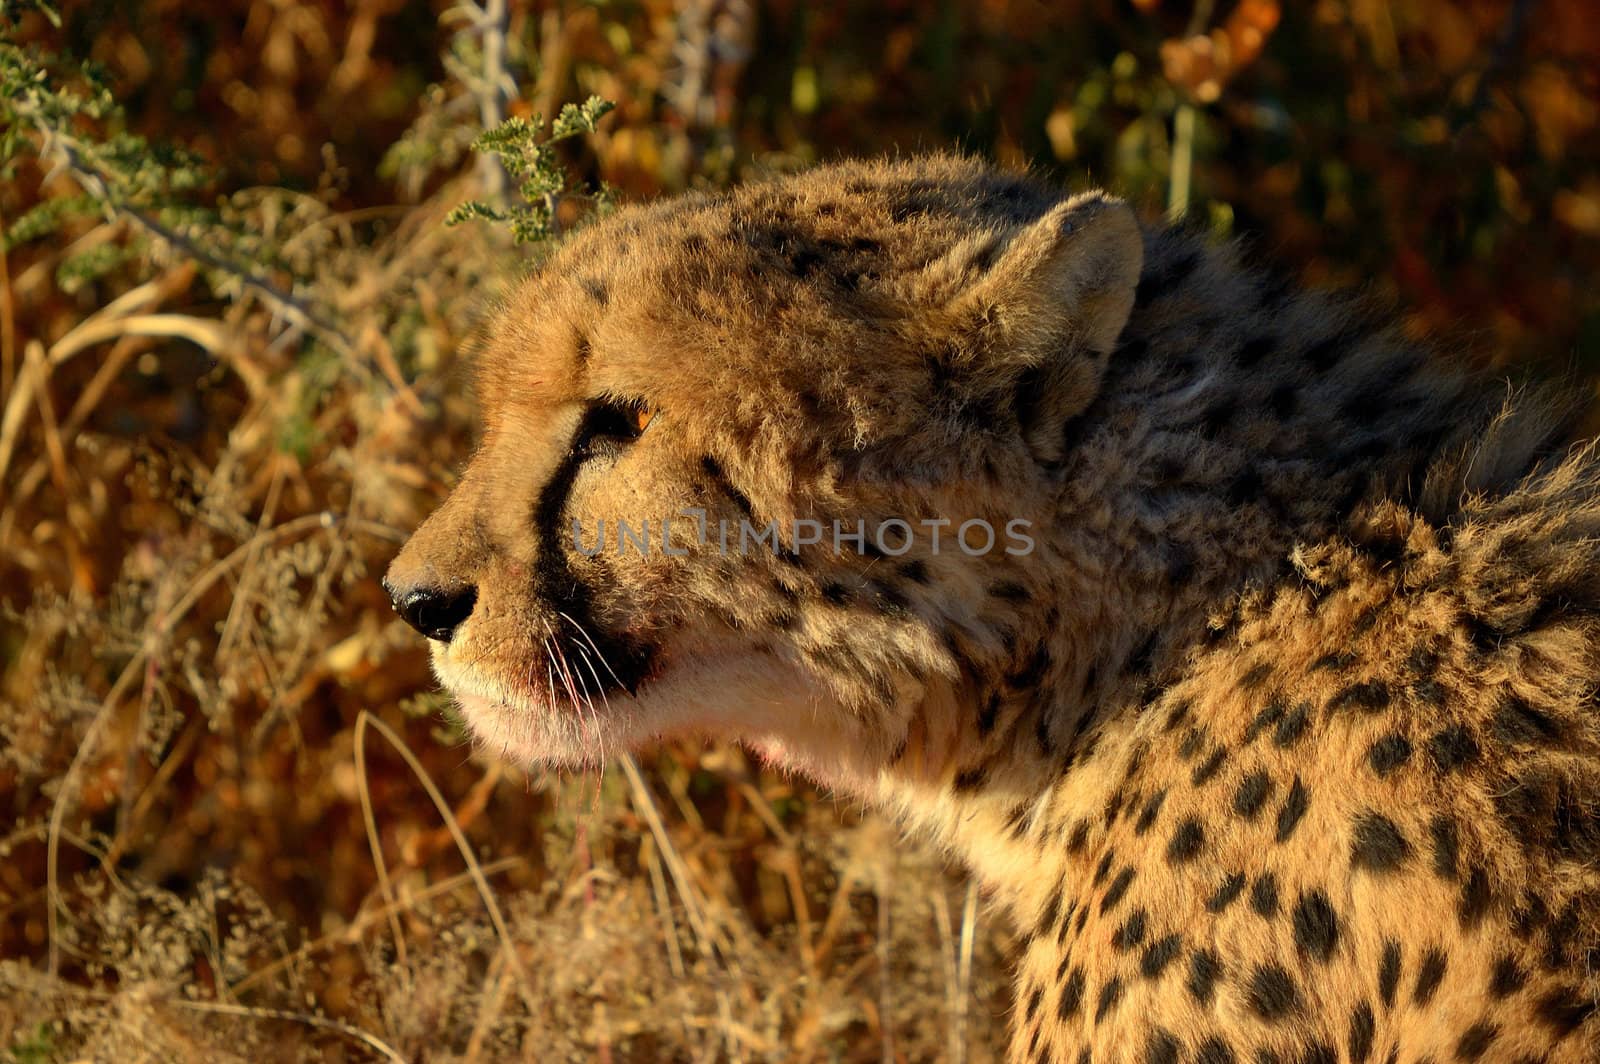 A Cheetah, Acinonyx jubatus, in the sunset at a sanctuary near the Etosha National Park, Namibia